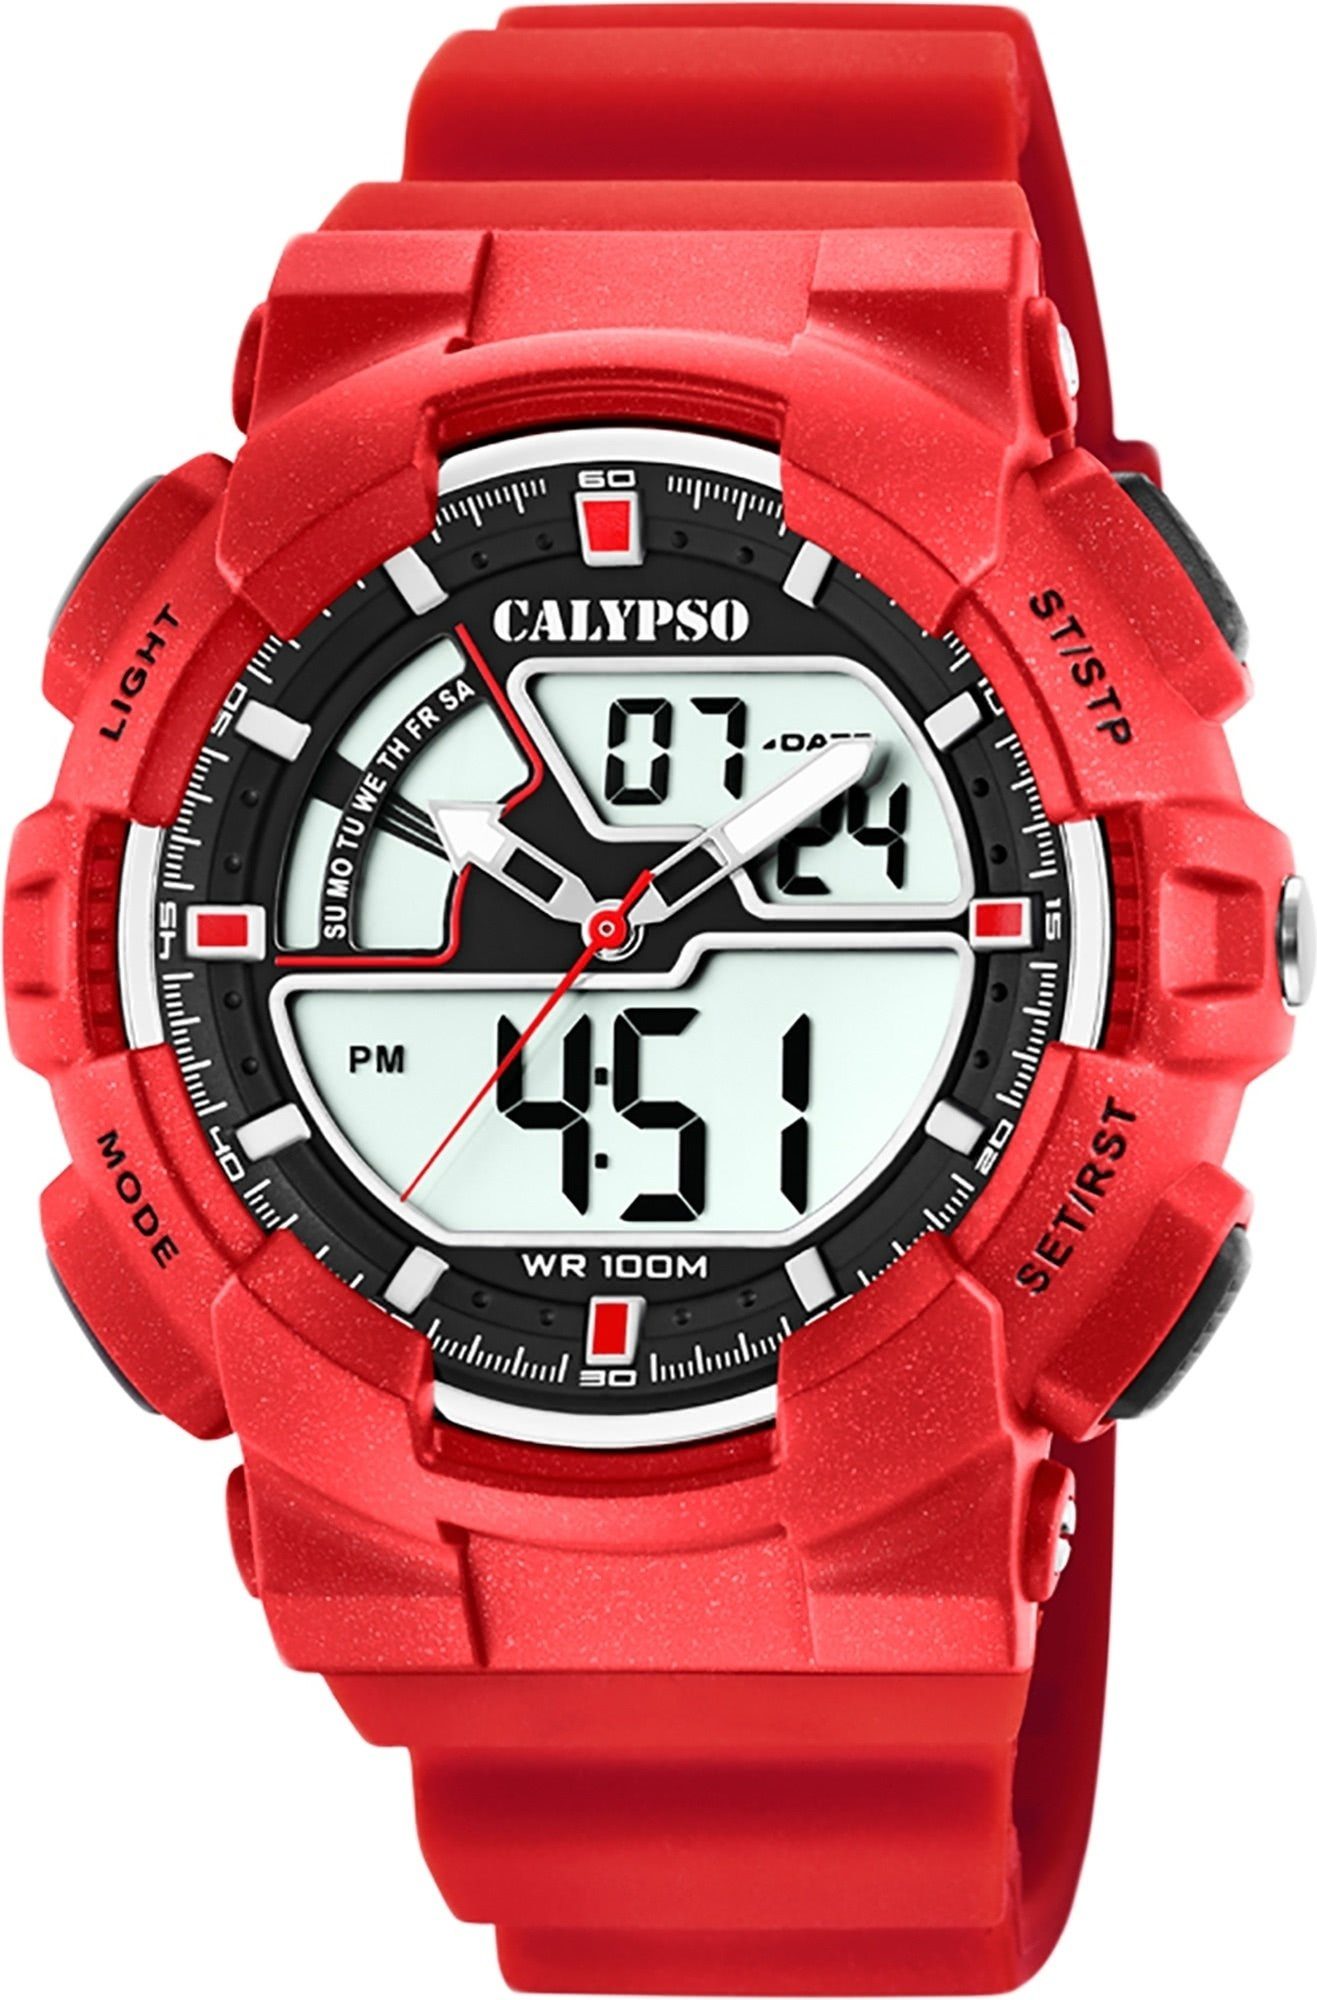 Sport Digitaluhr Calypso Herren PUarmband rot, WATCHES Herren Armbanduhr Kunststoff, K5771/2, rund, CALYPSO Uhr